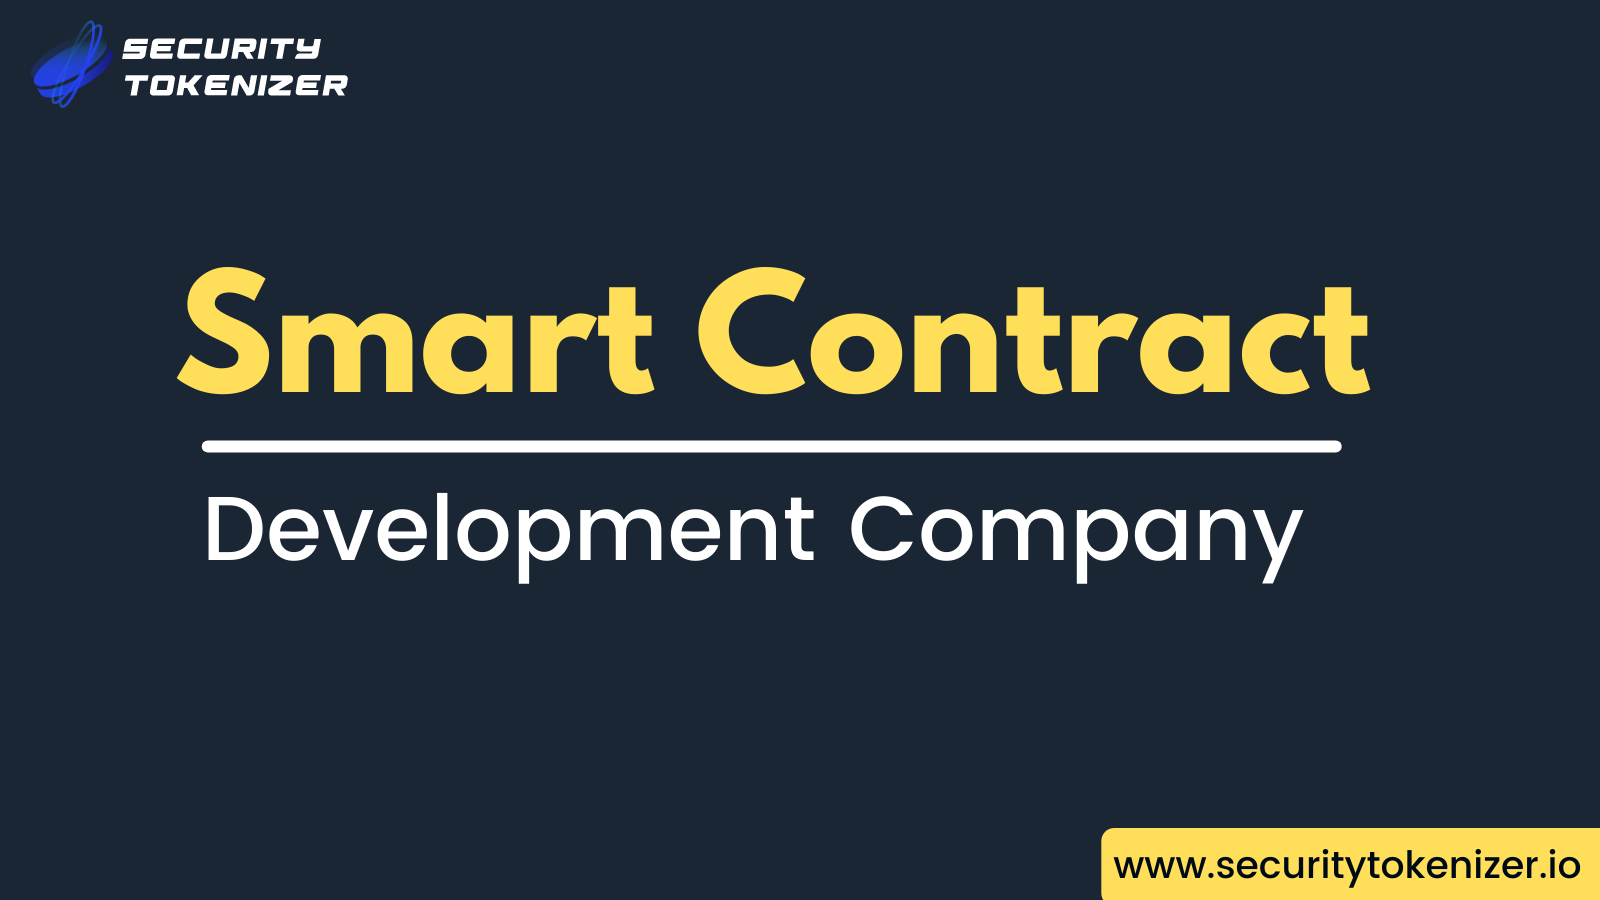 Smart Contract Development Company - Security Tokenizer